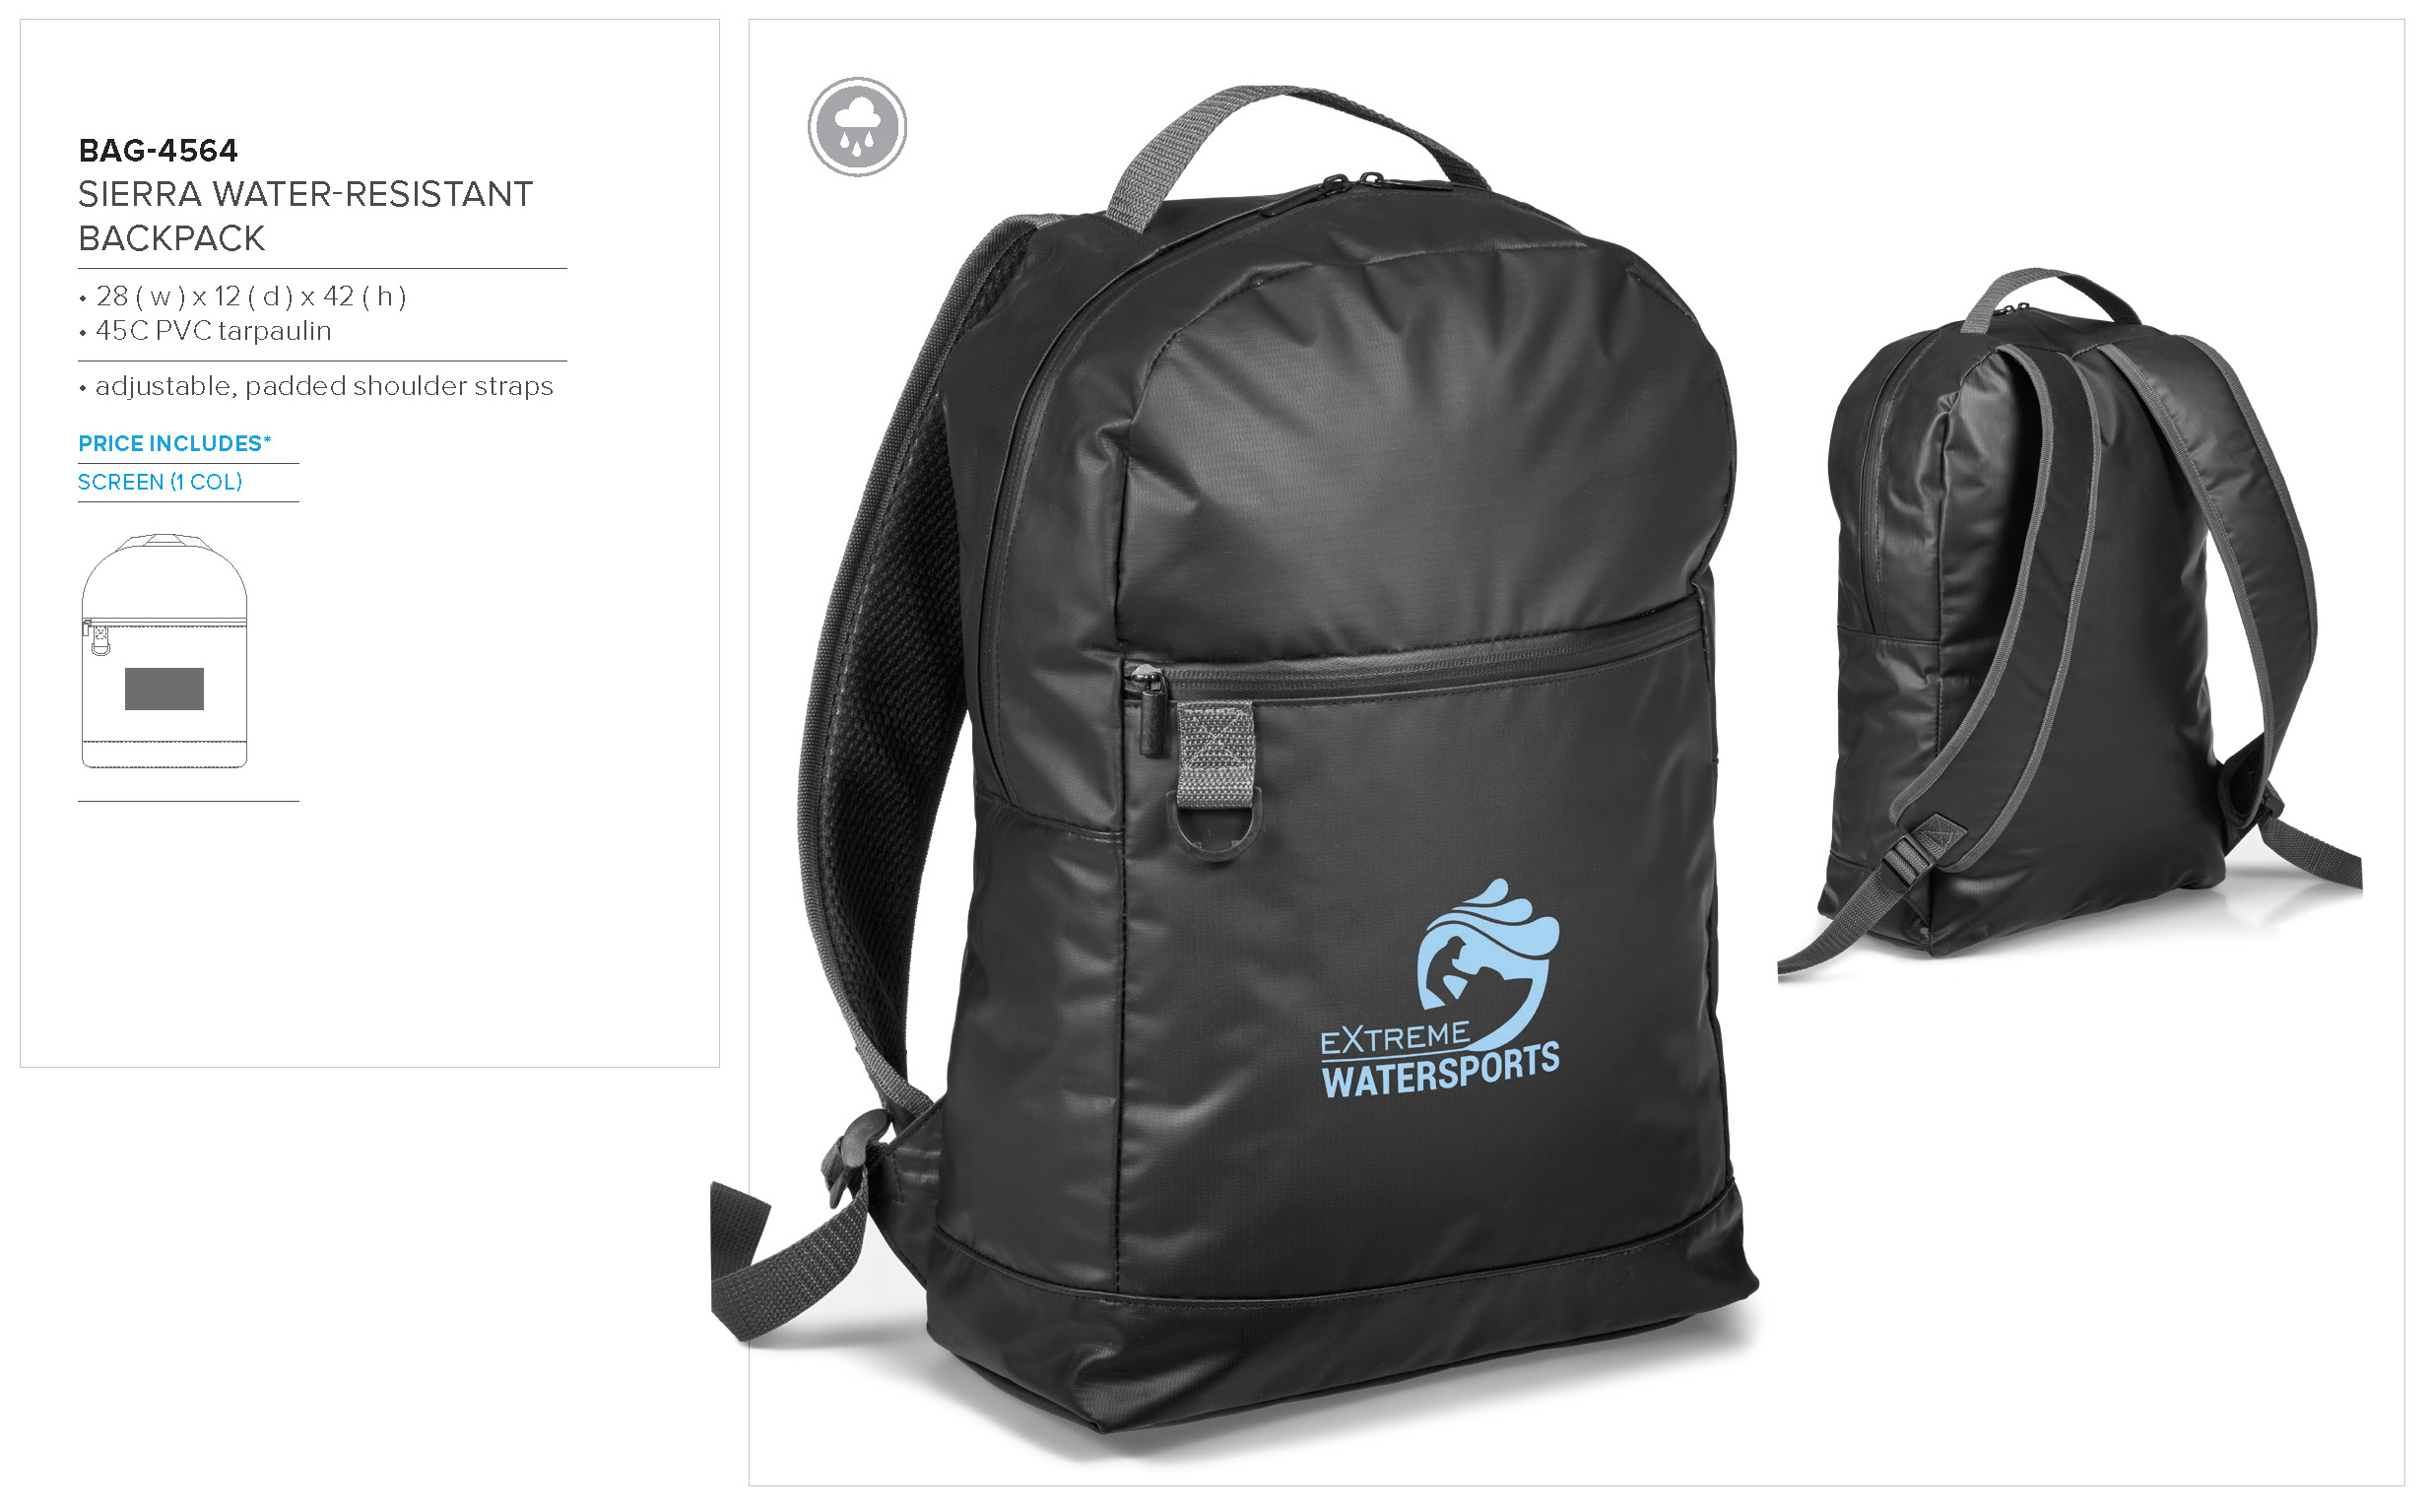 BAG-4564 - Sierra Water-Resistant Backpack - Catalogue Image